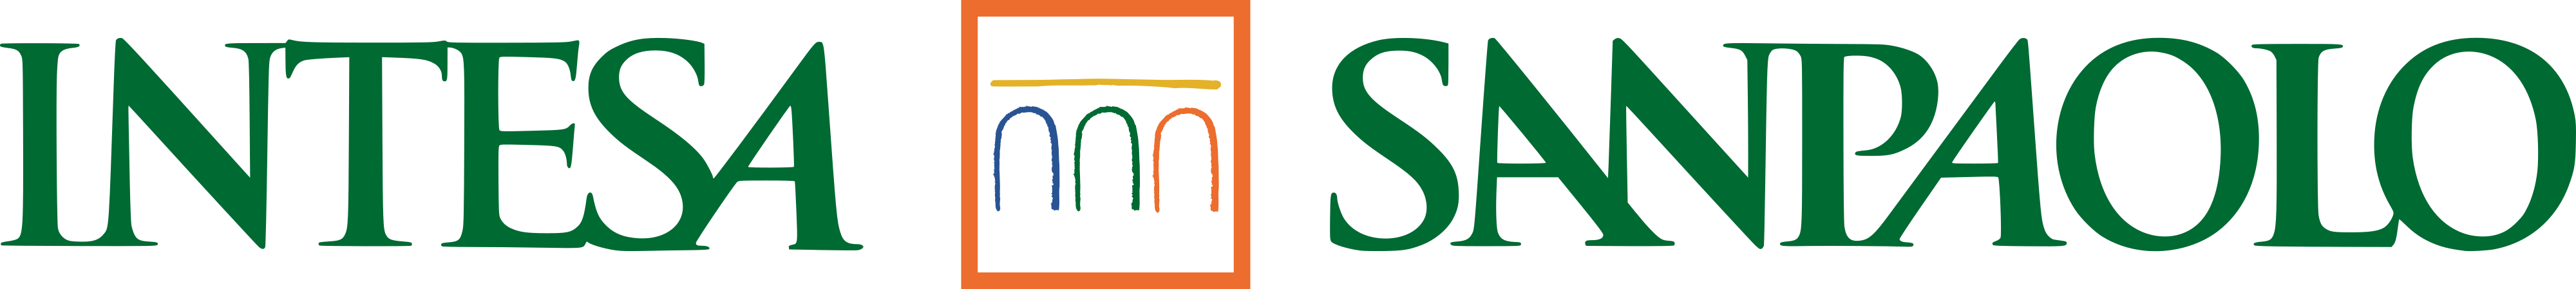 Intesa Sanpaolo logo - download.